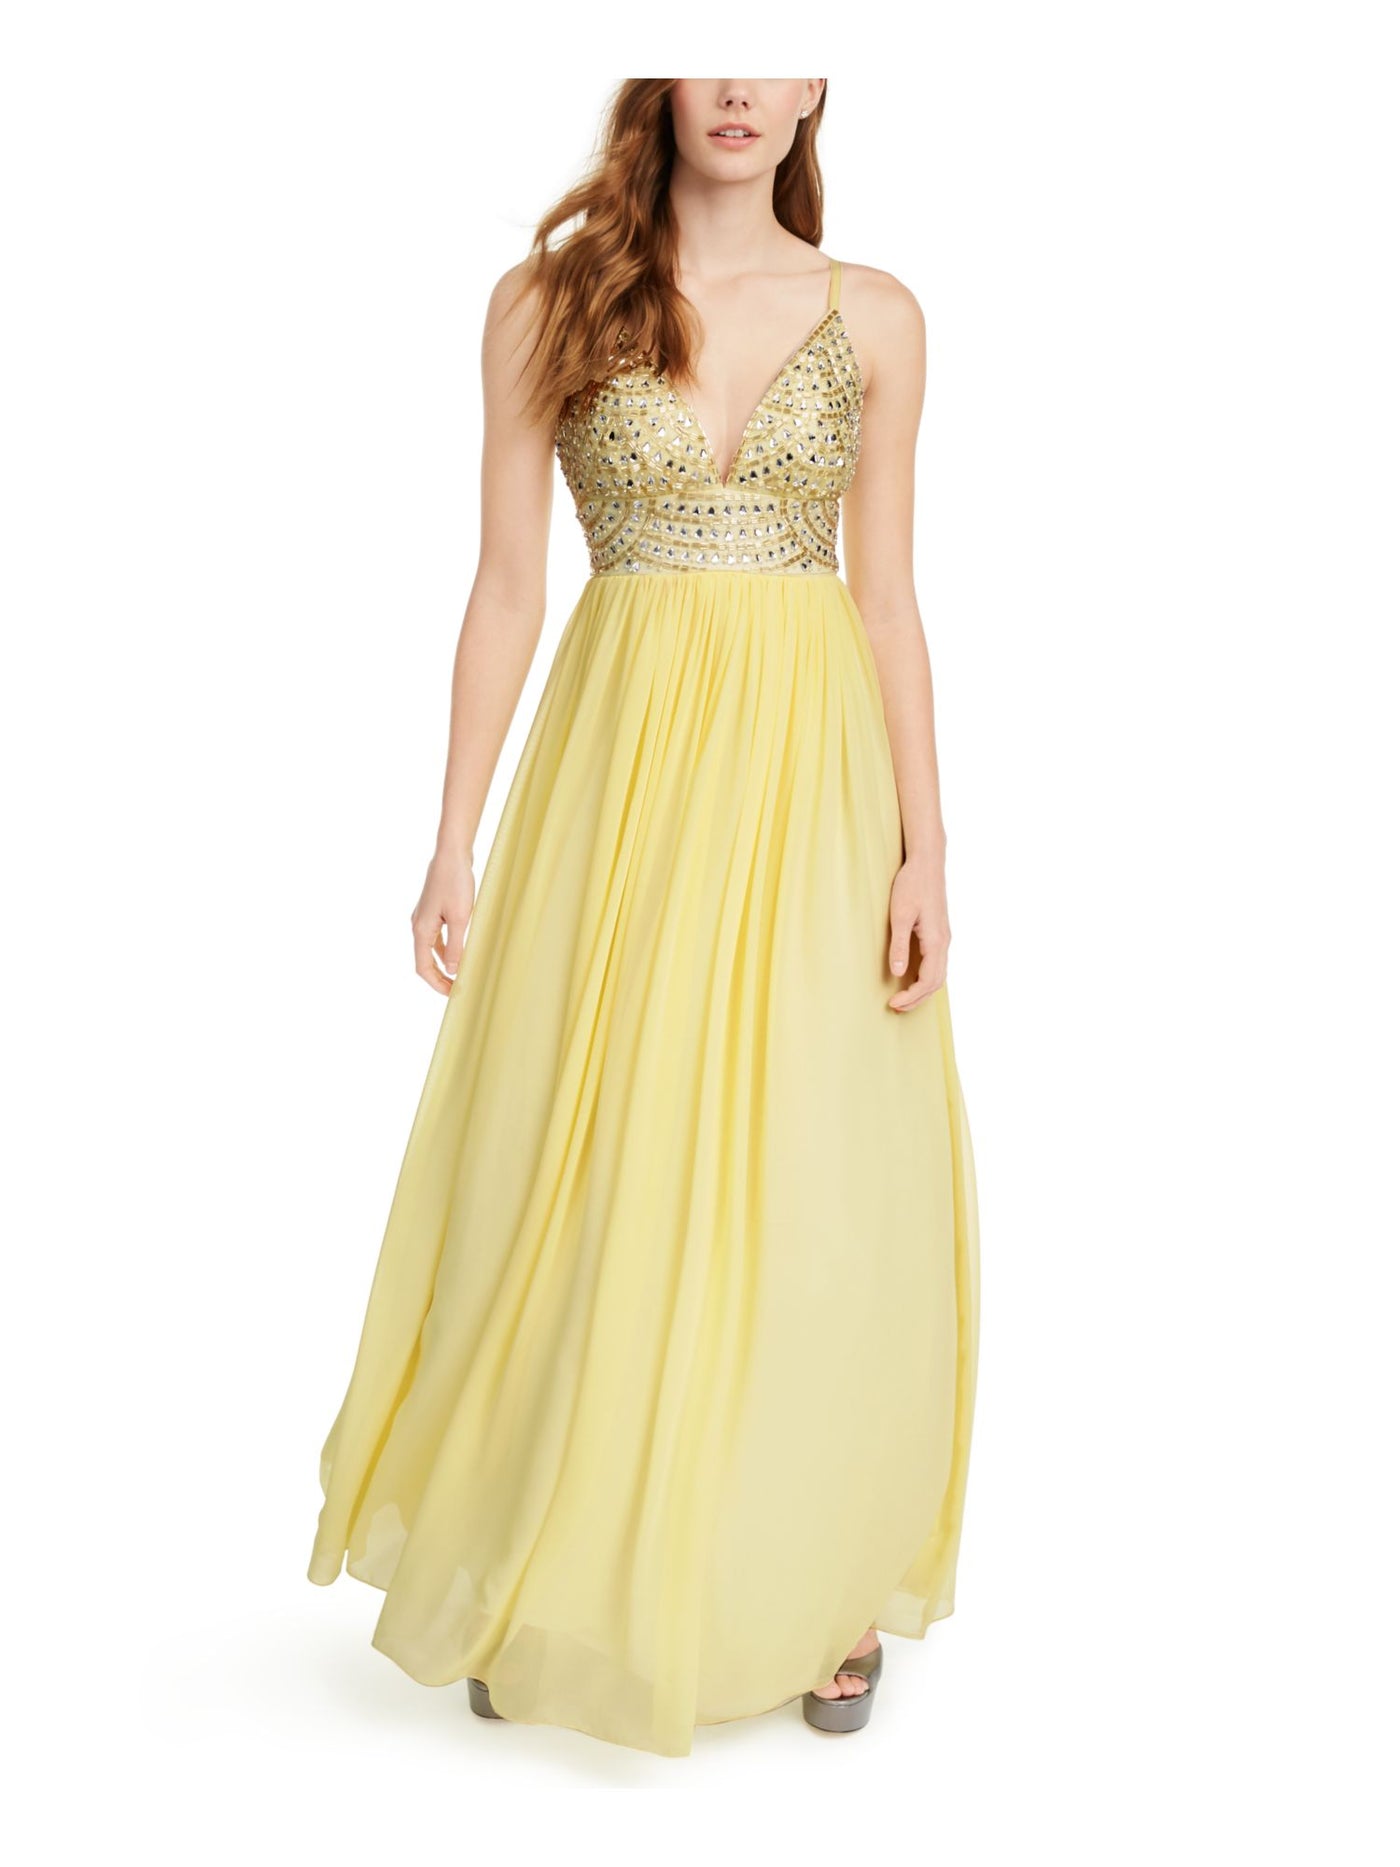 SPEECHLESS Womens Yellow Embellished Zippered Chiffon Ball Gown Spaghetti Strap V Neck Full-Length Prom Dress Juniors 1